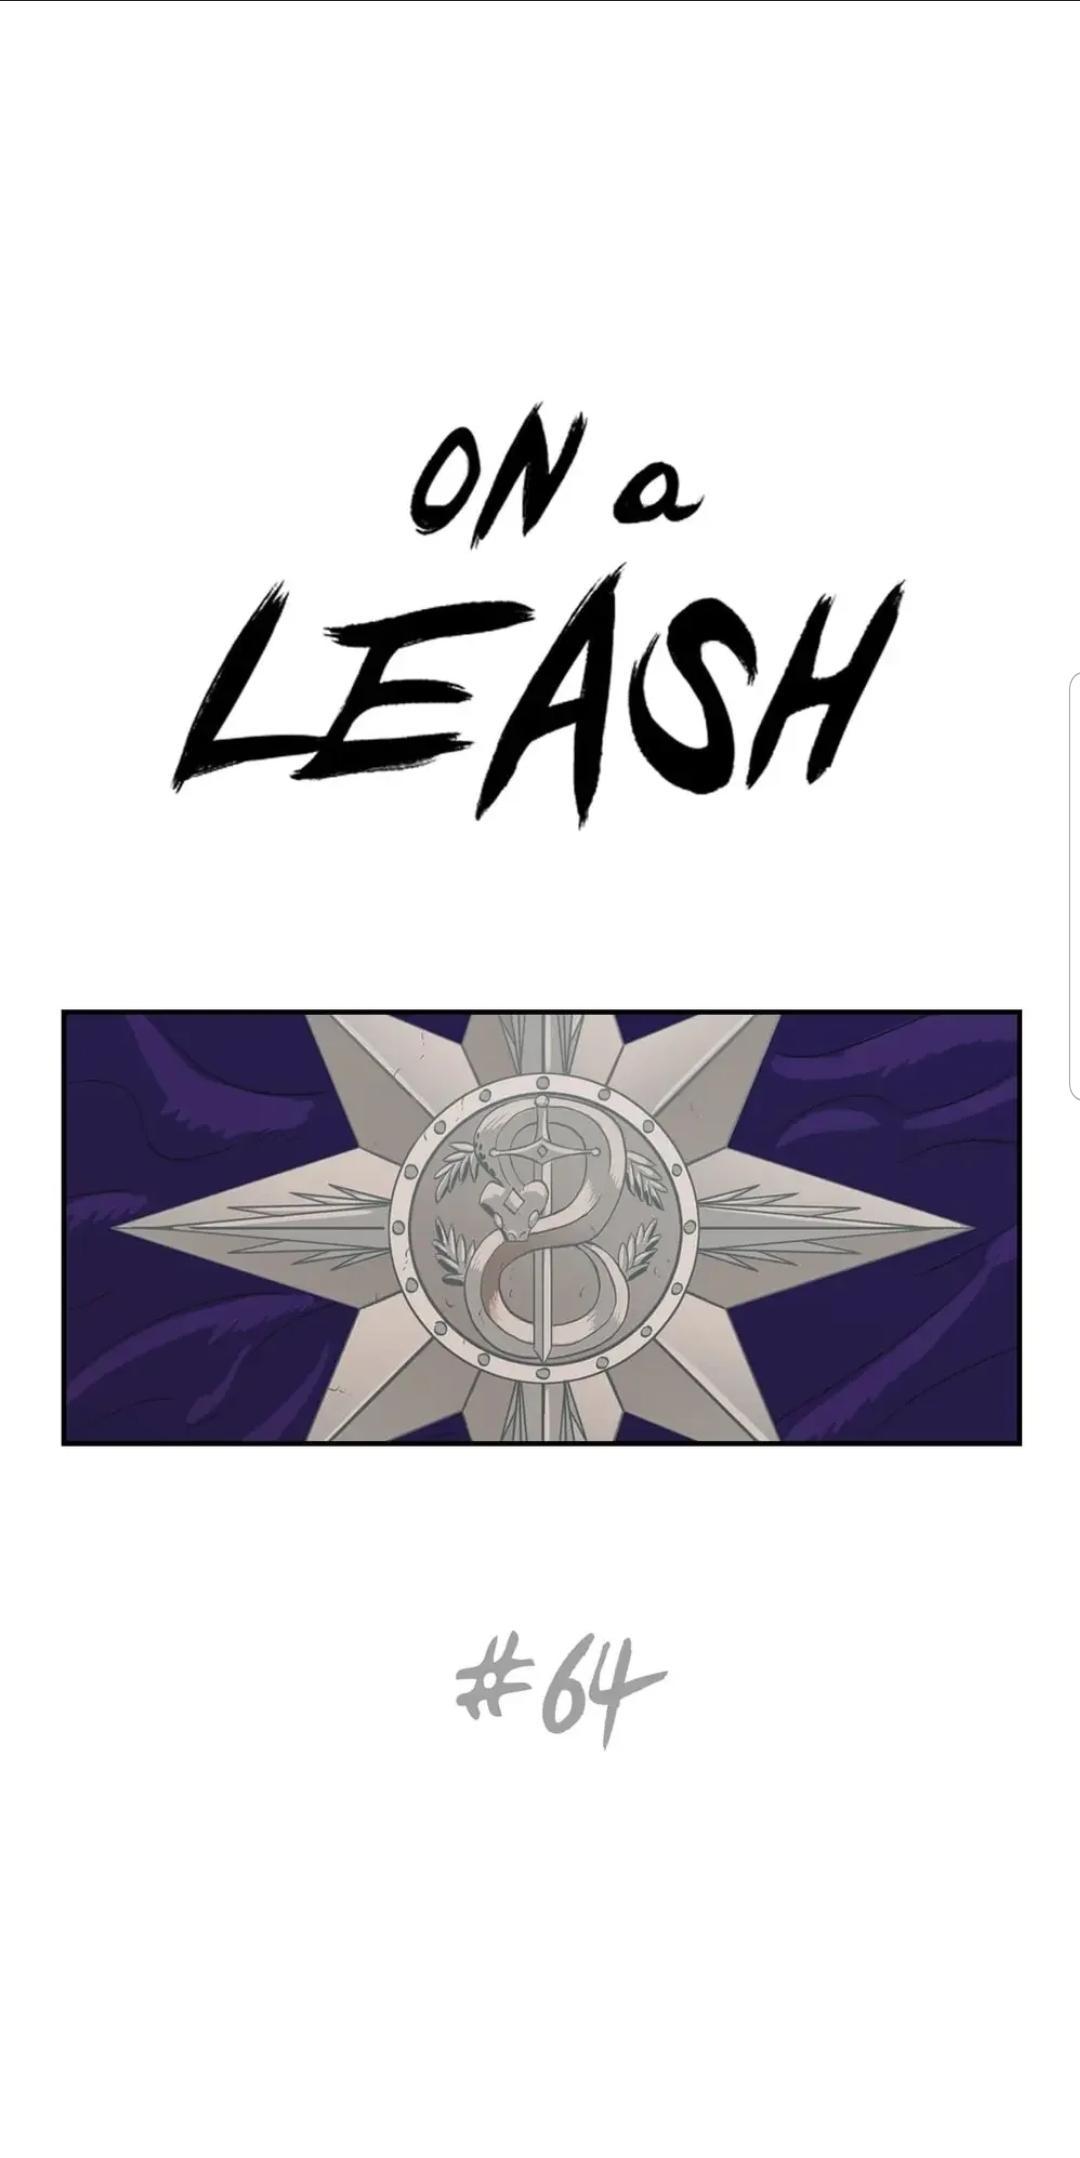 League of Legends: What Is Leash?